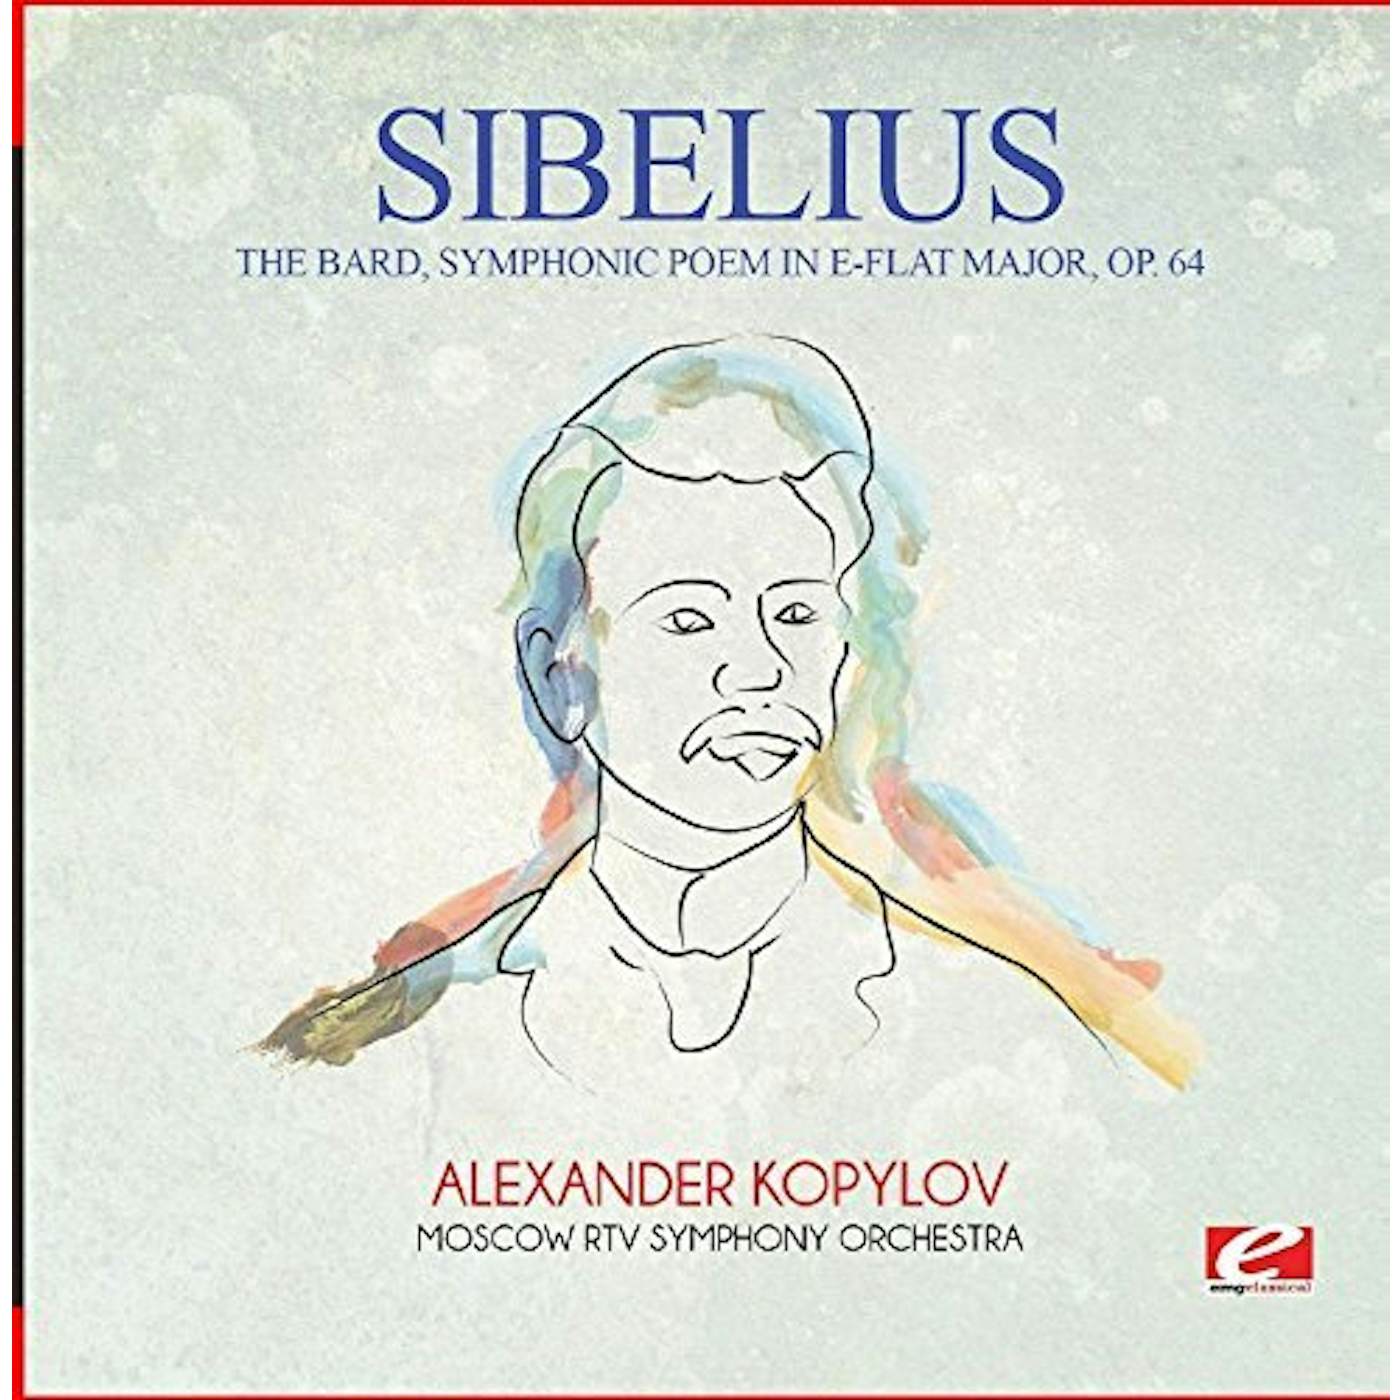 Sibelius THE BARD SYMPHONIC POEM IN E-FLAT MAJOR OP. 64 CD